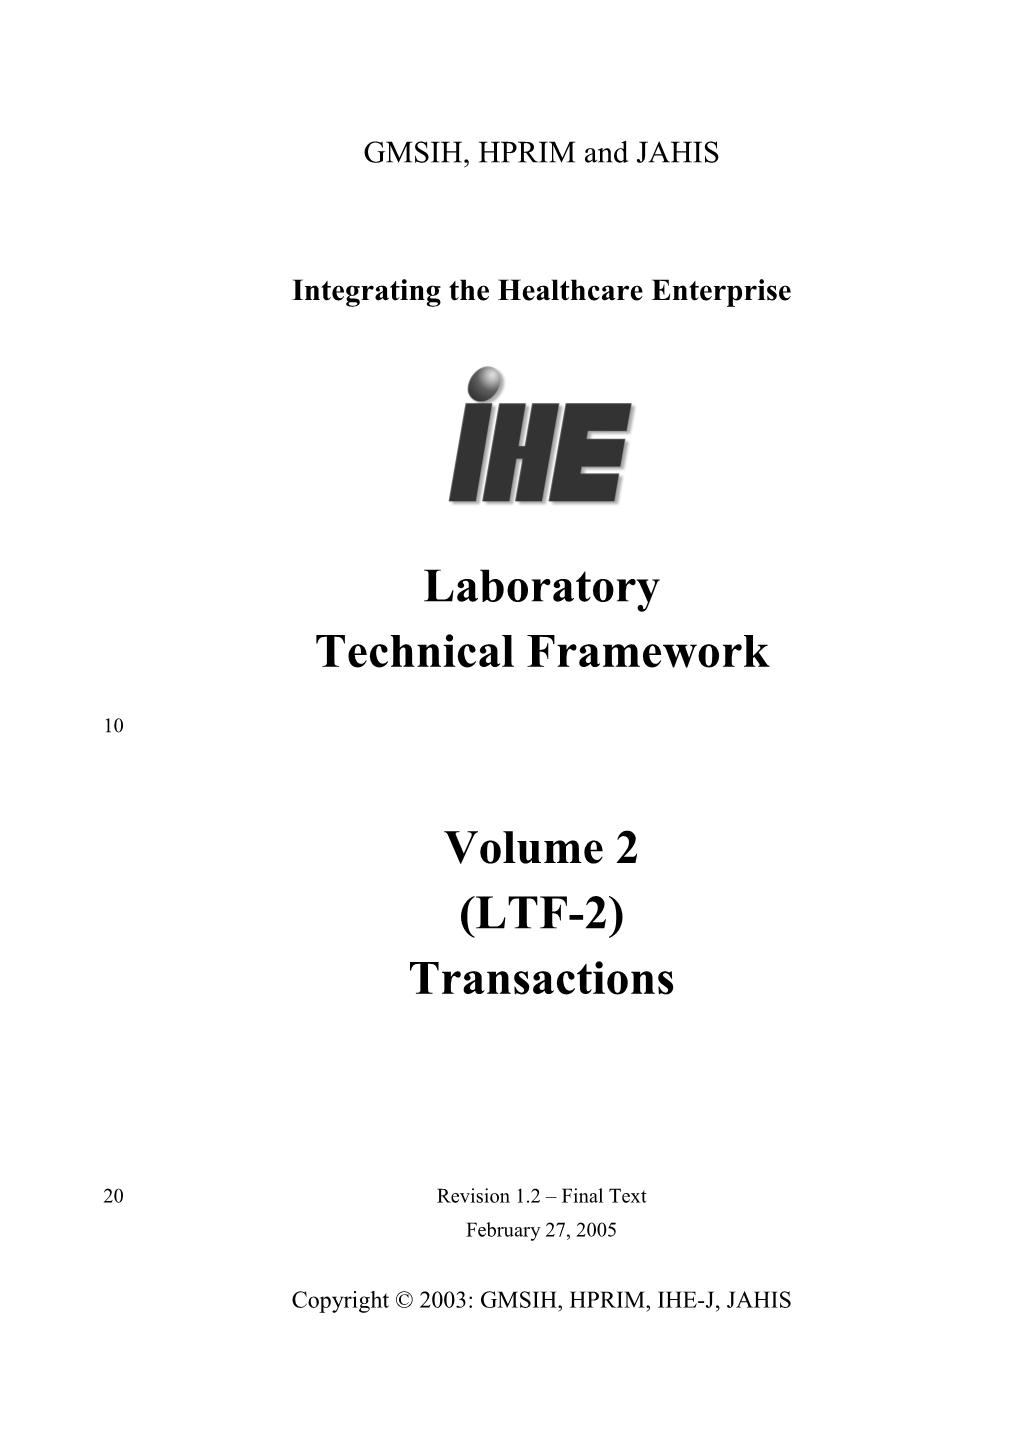 Laboratory Technical Framework Volume 2